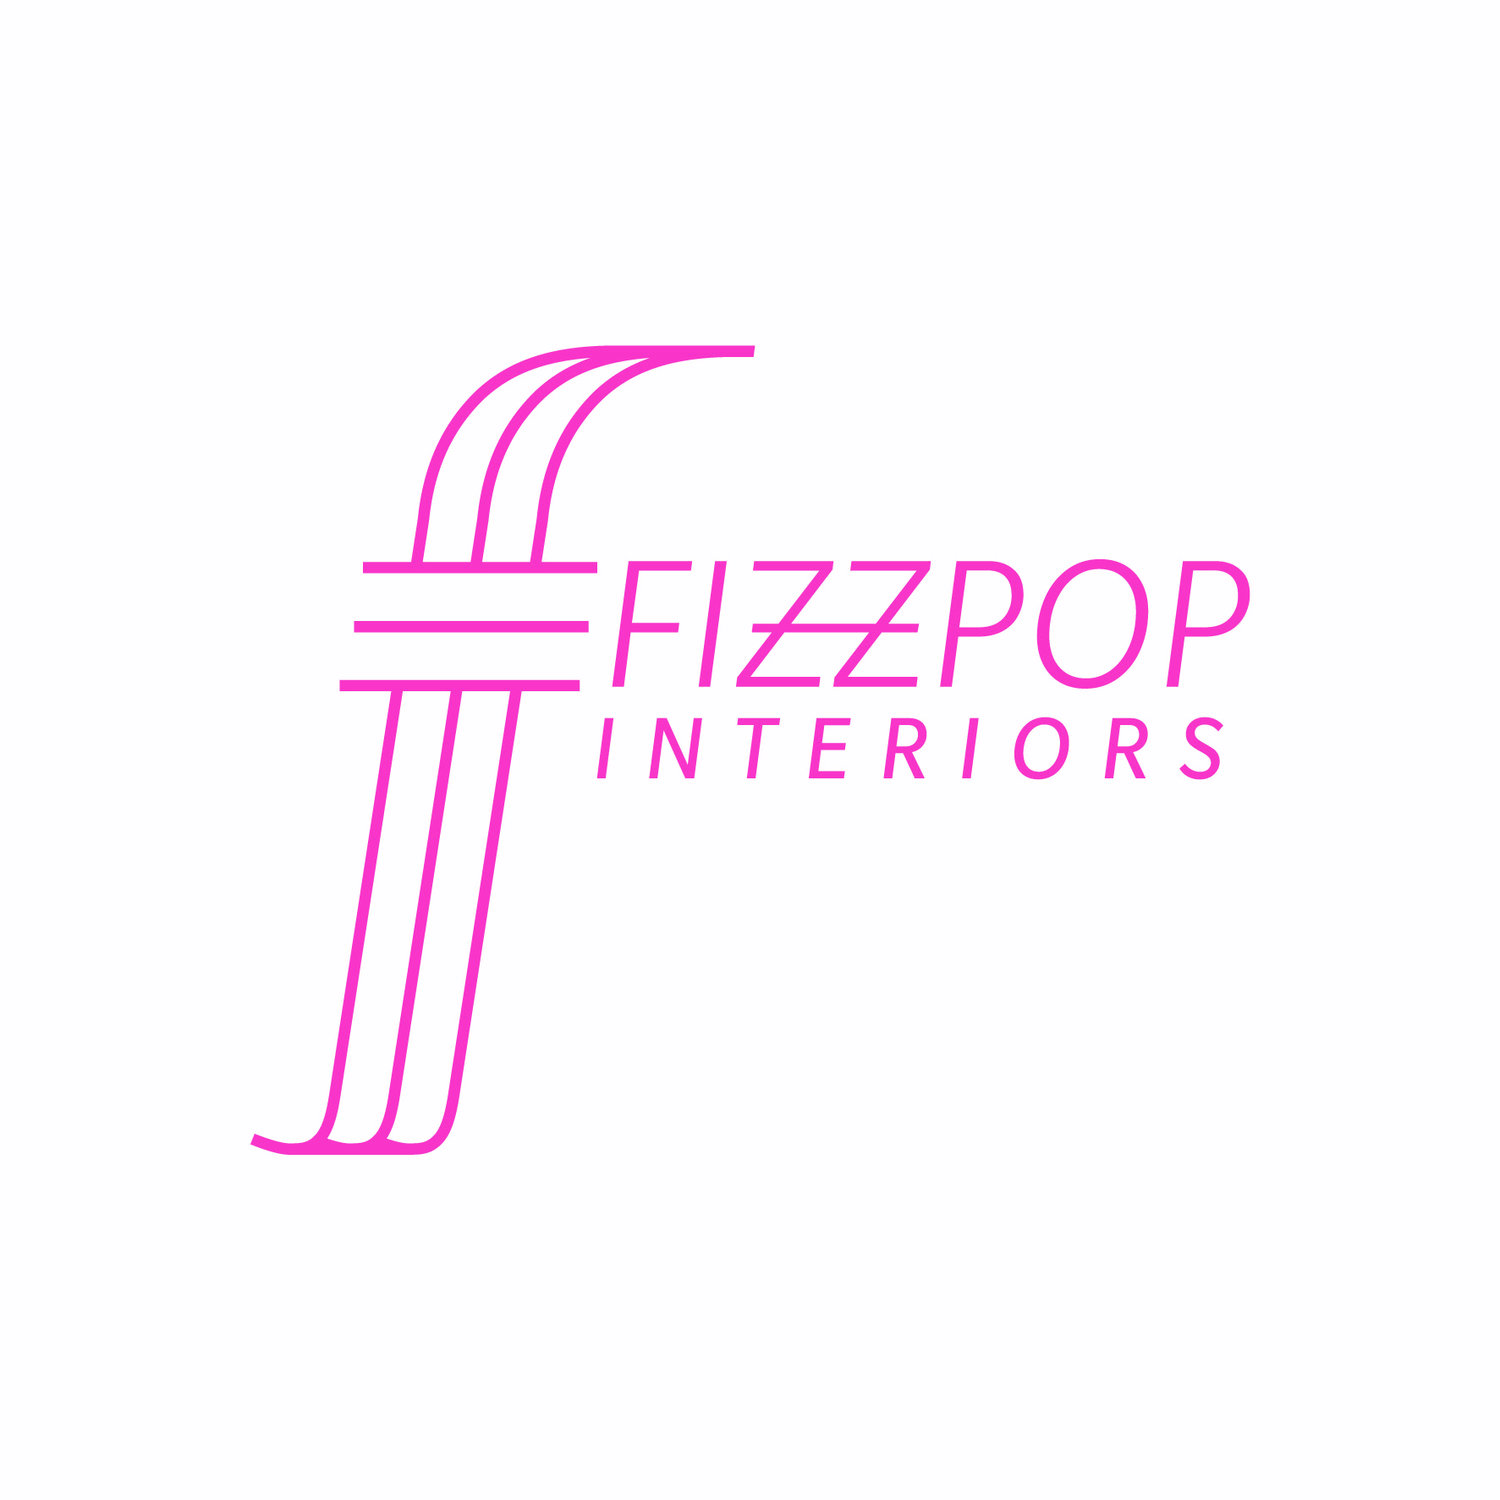 FIzzPop Interiors